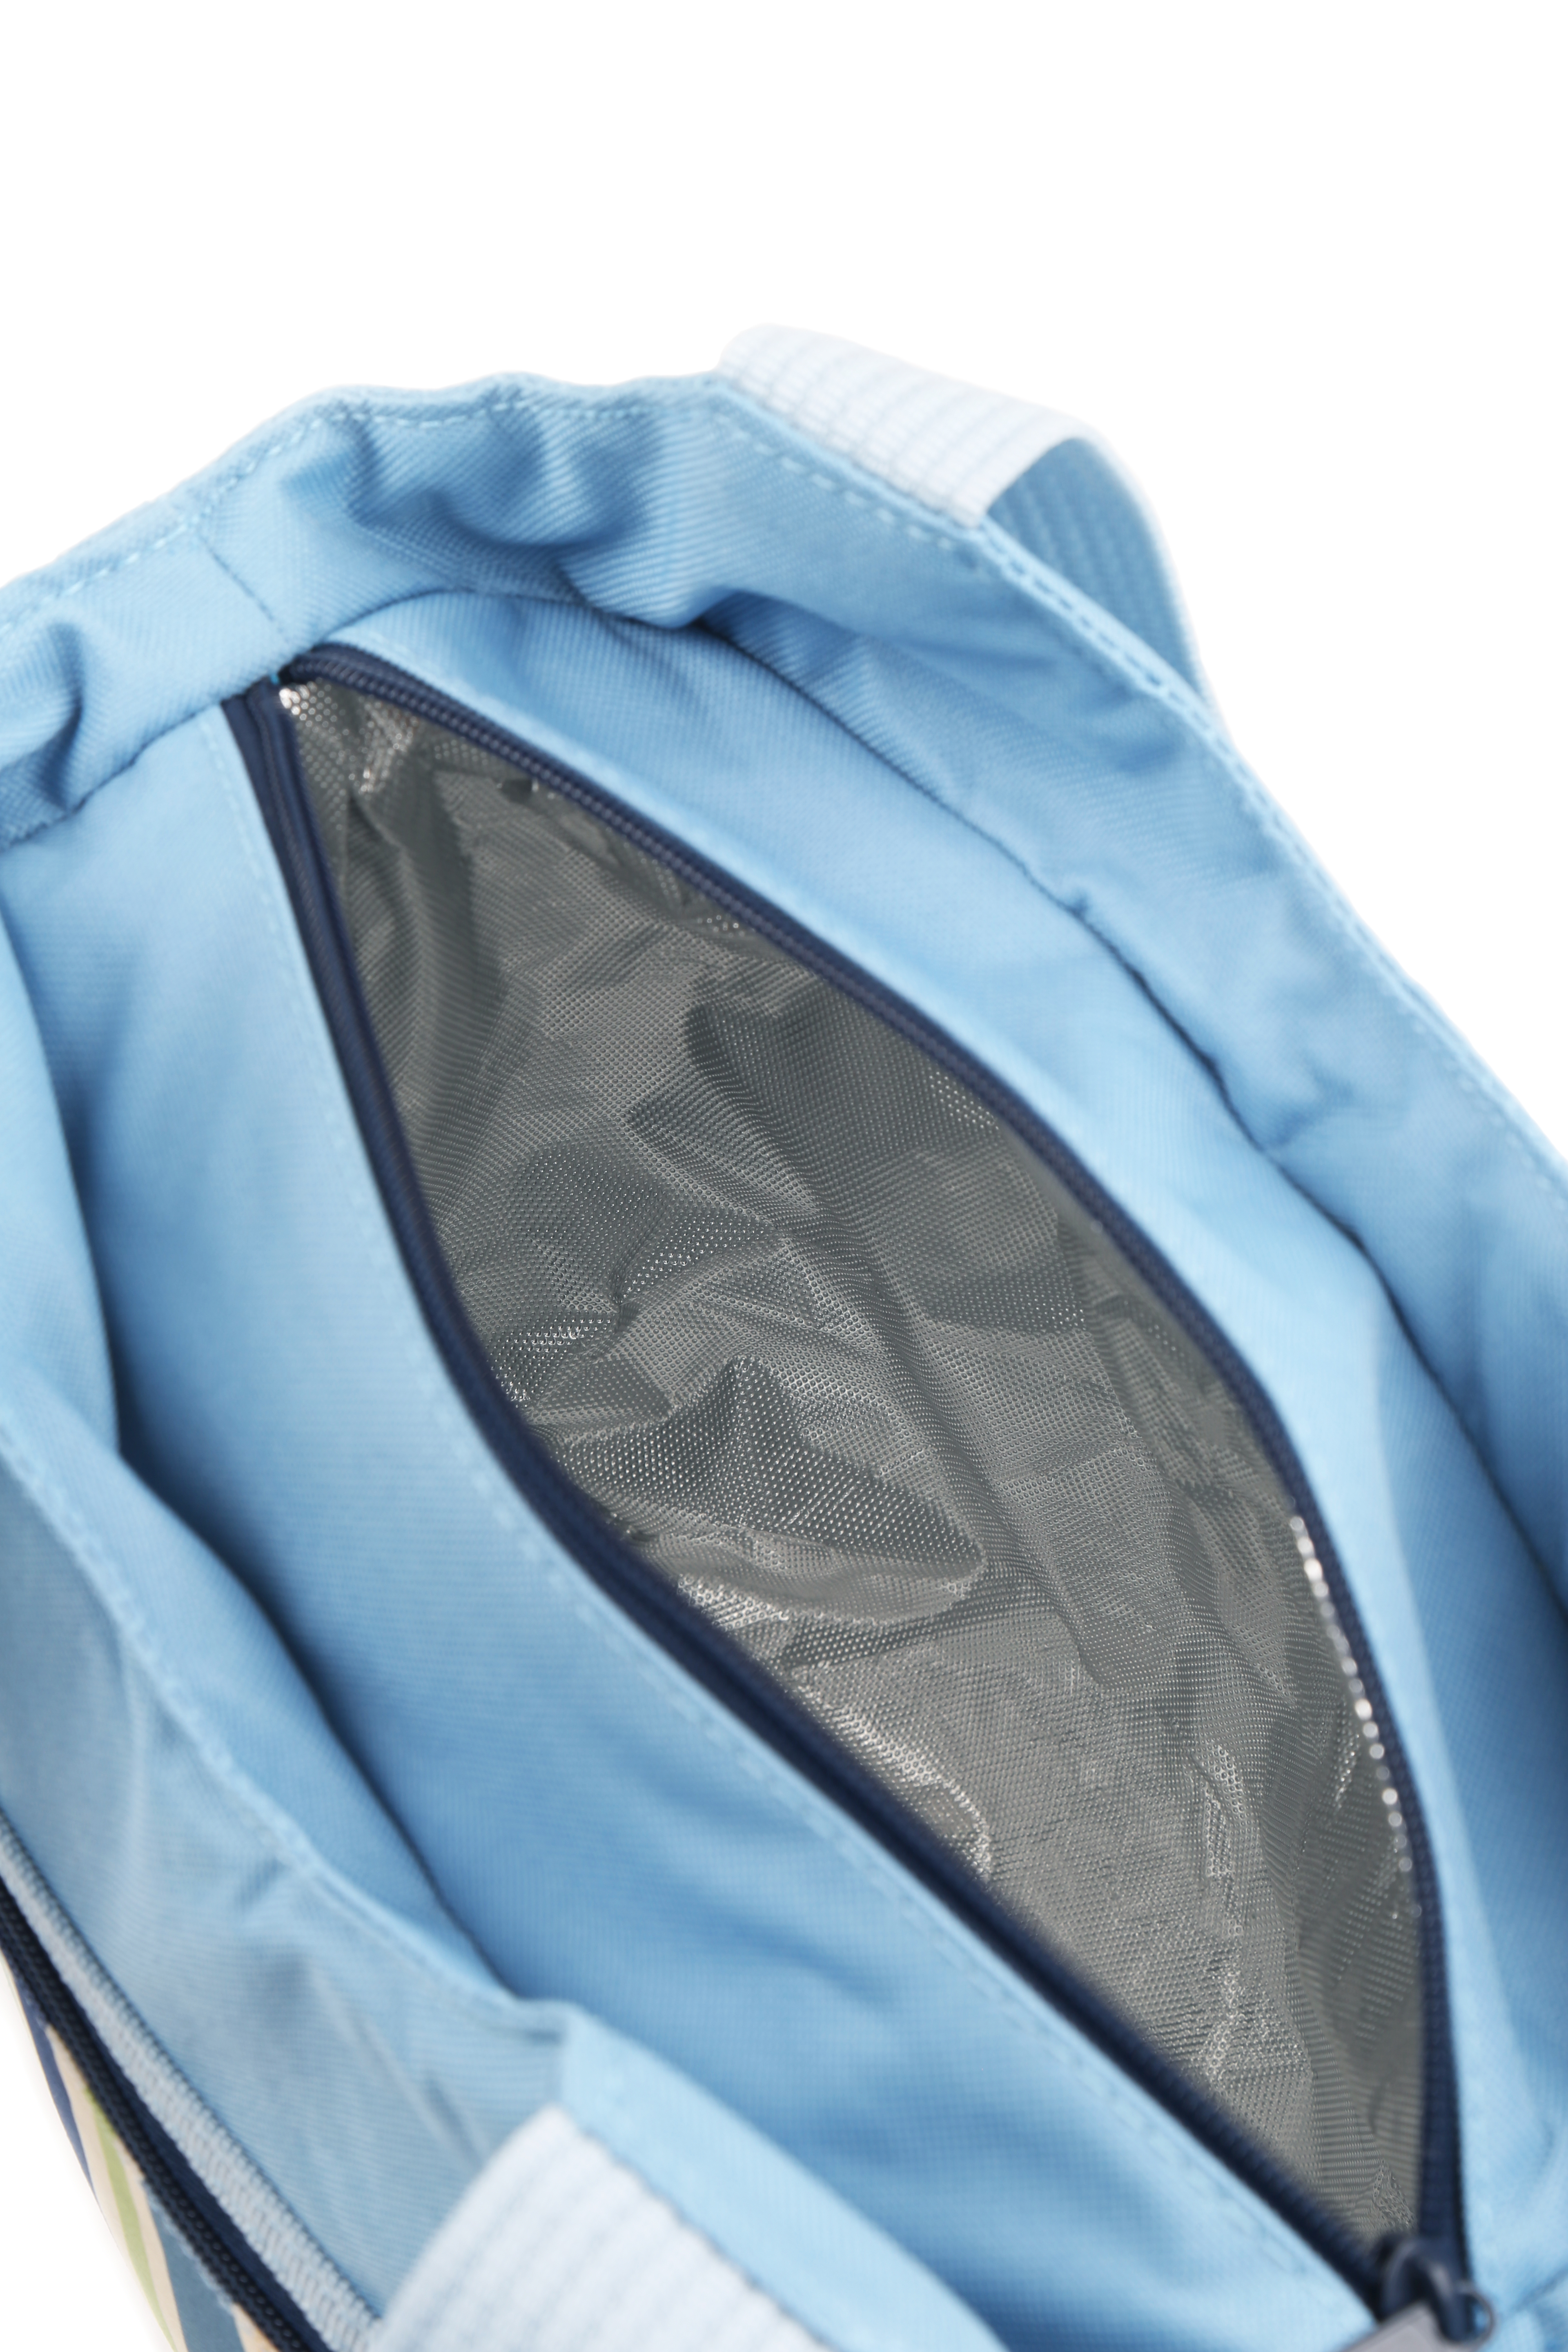 10 Litre Sky Blue Tote Cool Bag | Picnicware